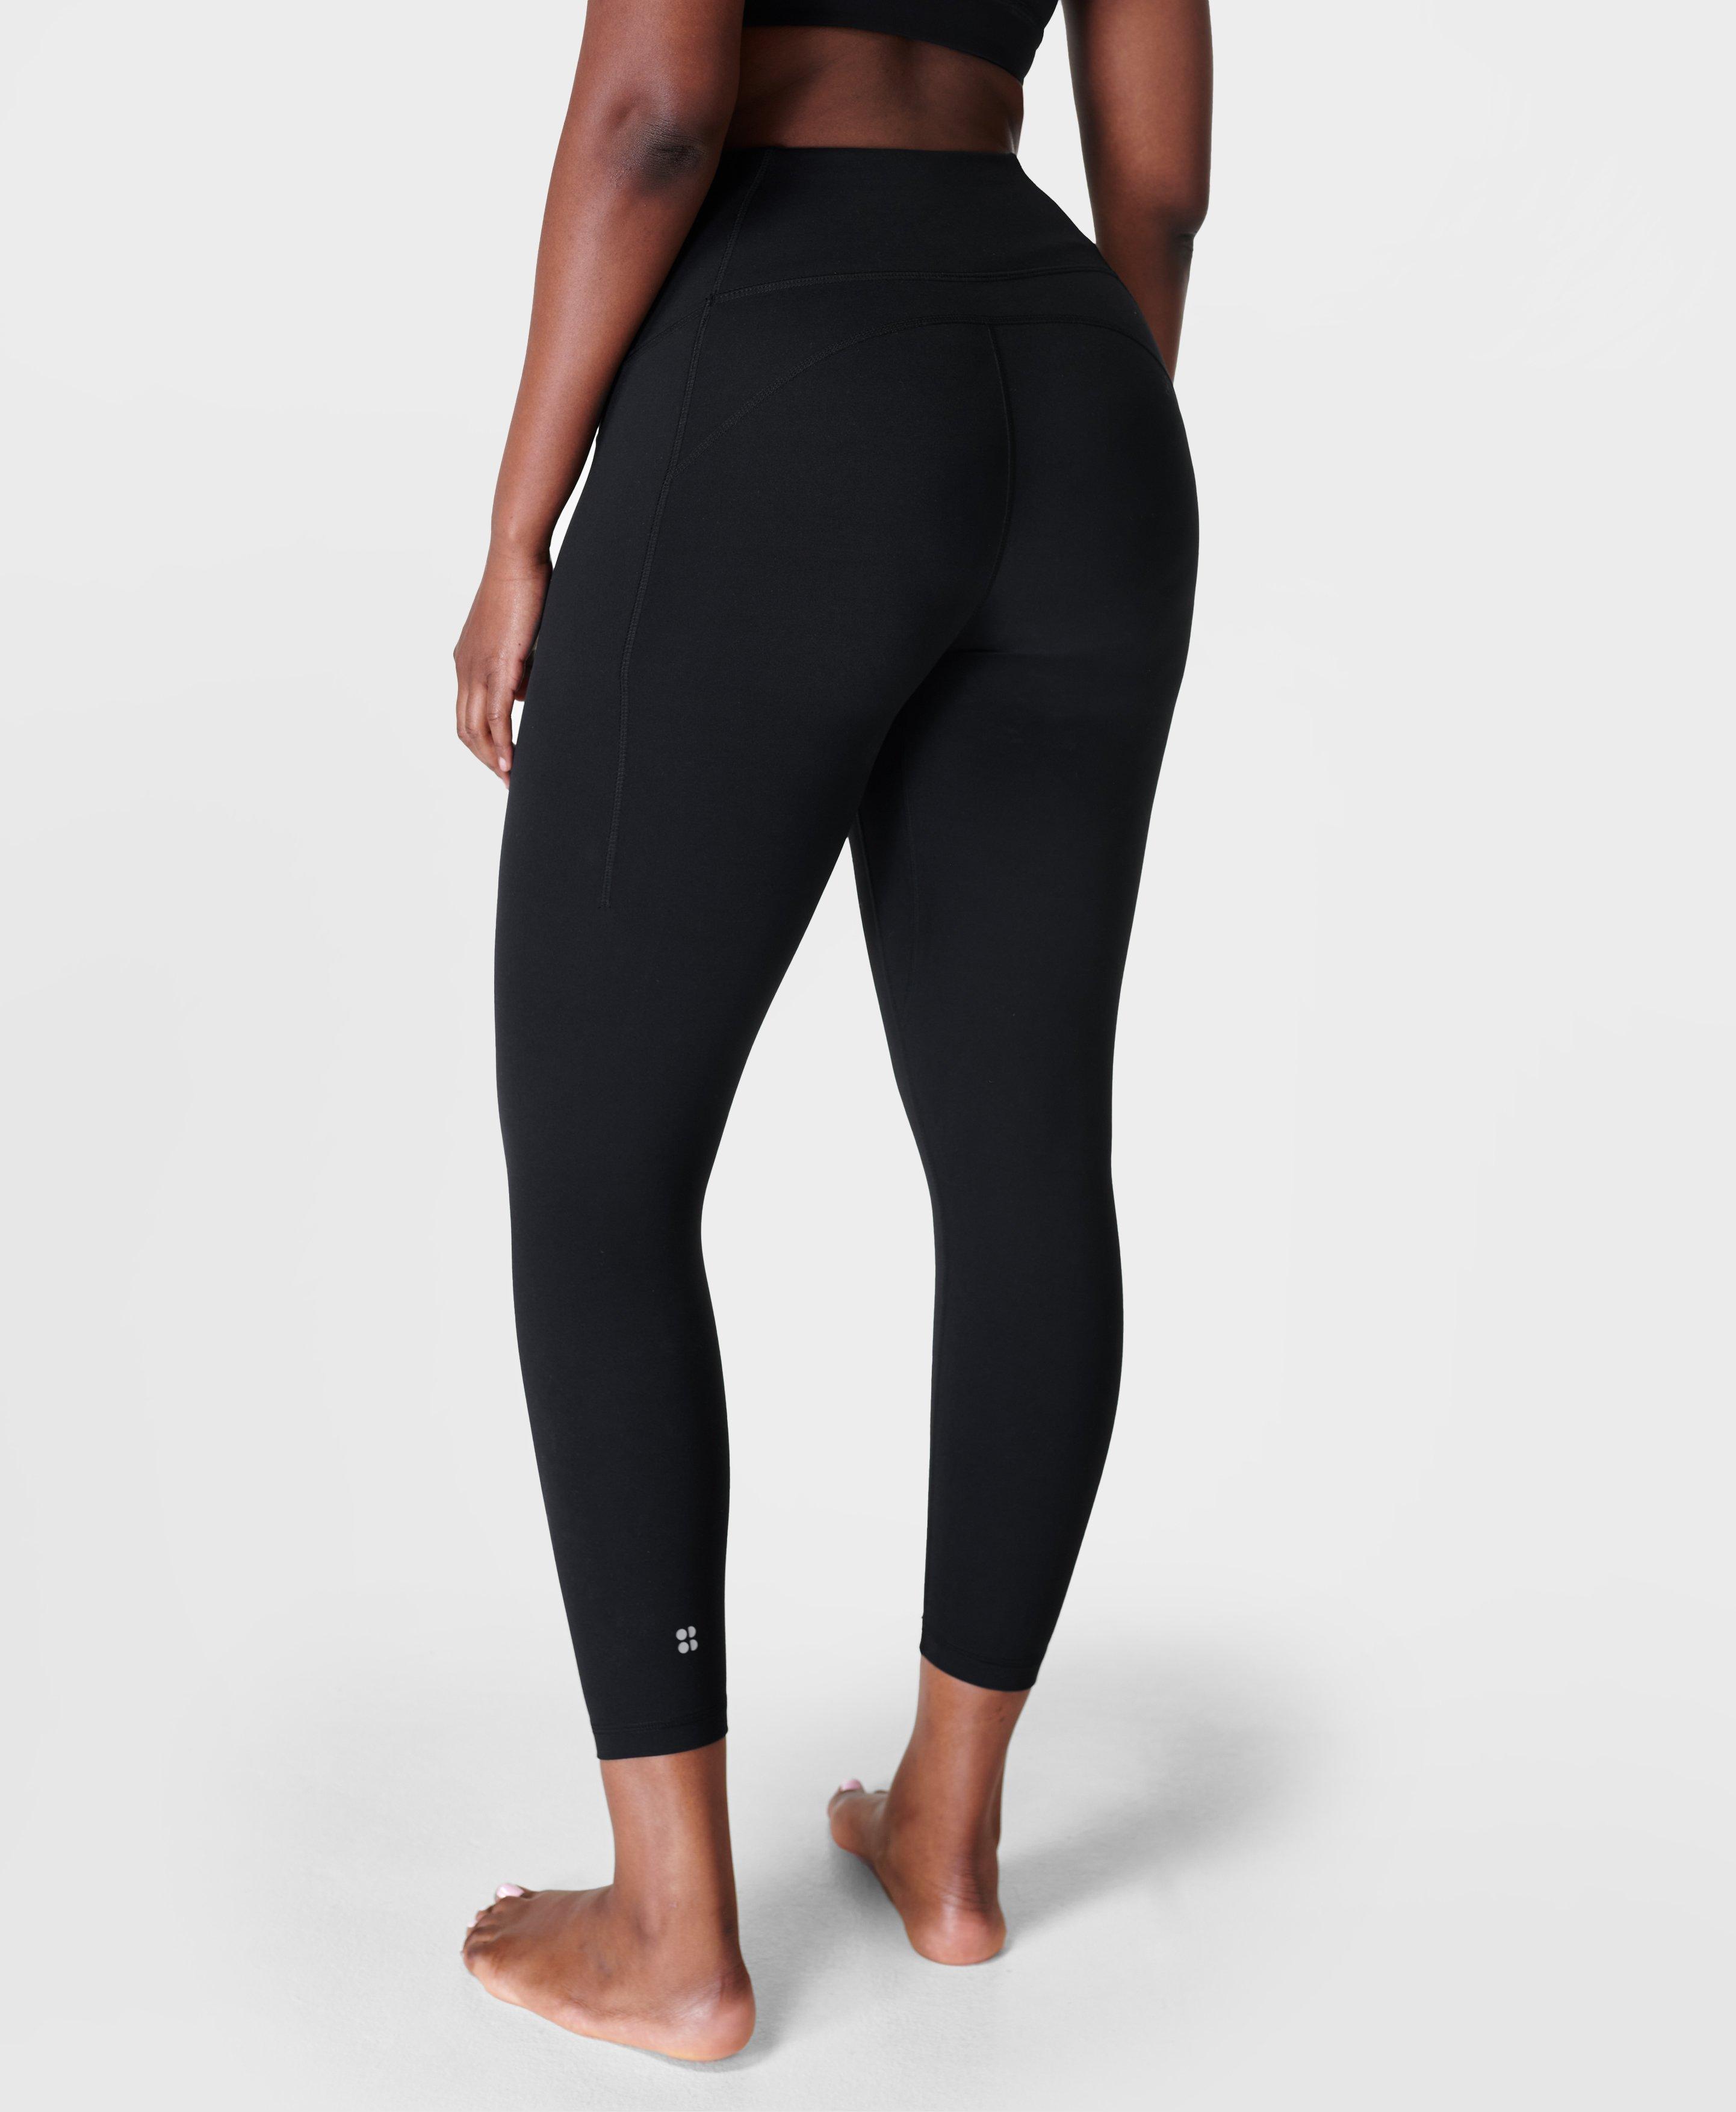 Hollow Hole Leggings Slim Yoga Pants-Black – W.T.I. Design